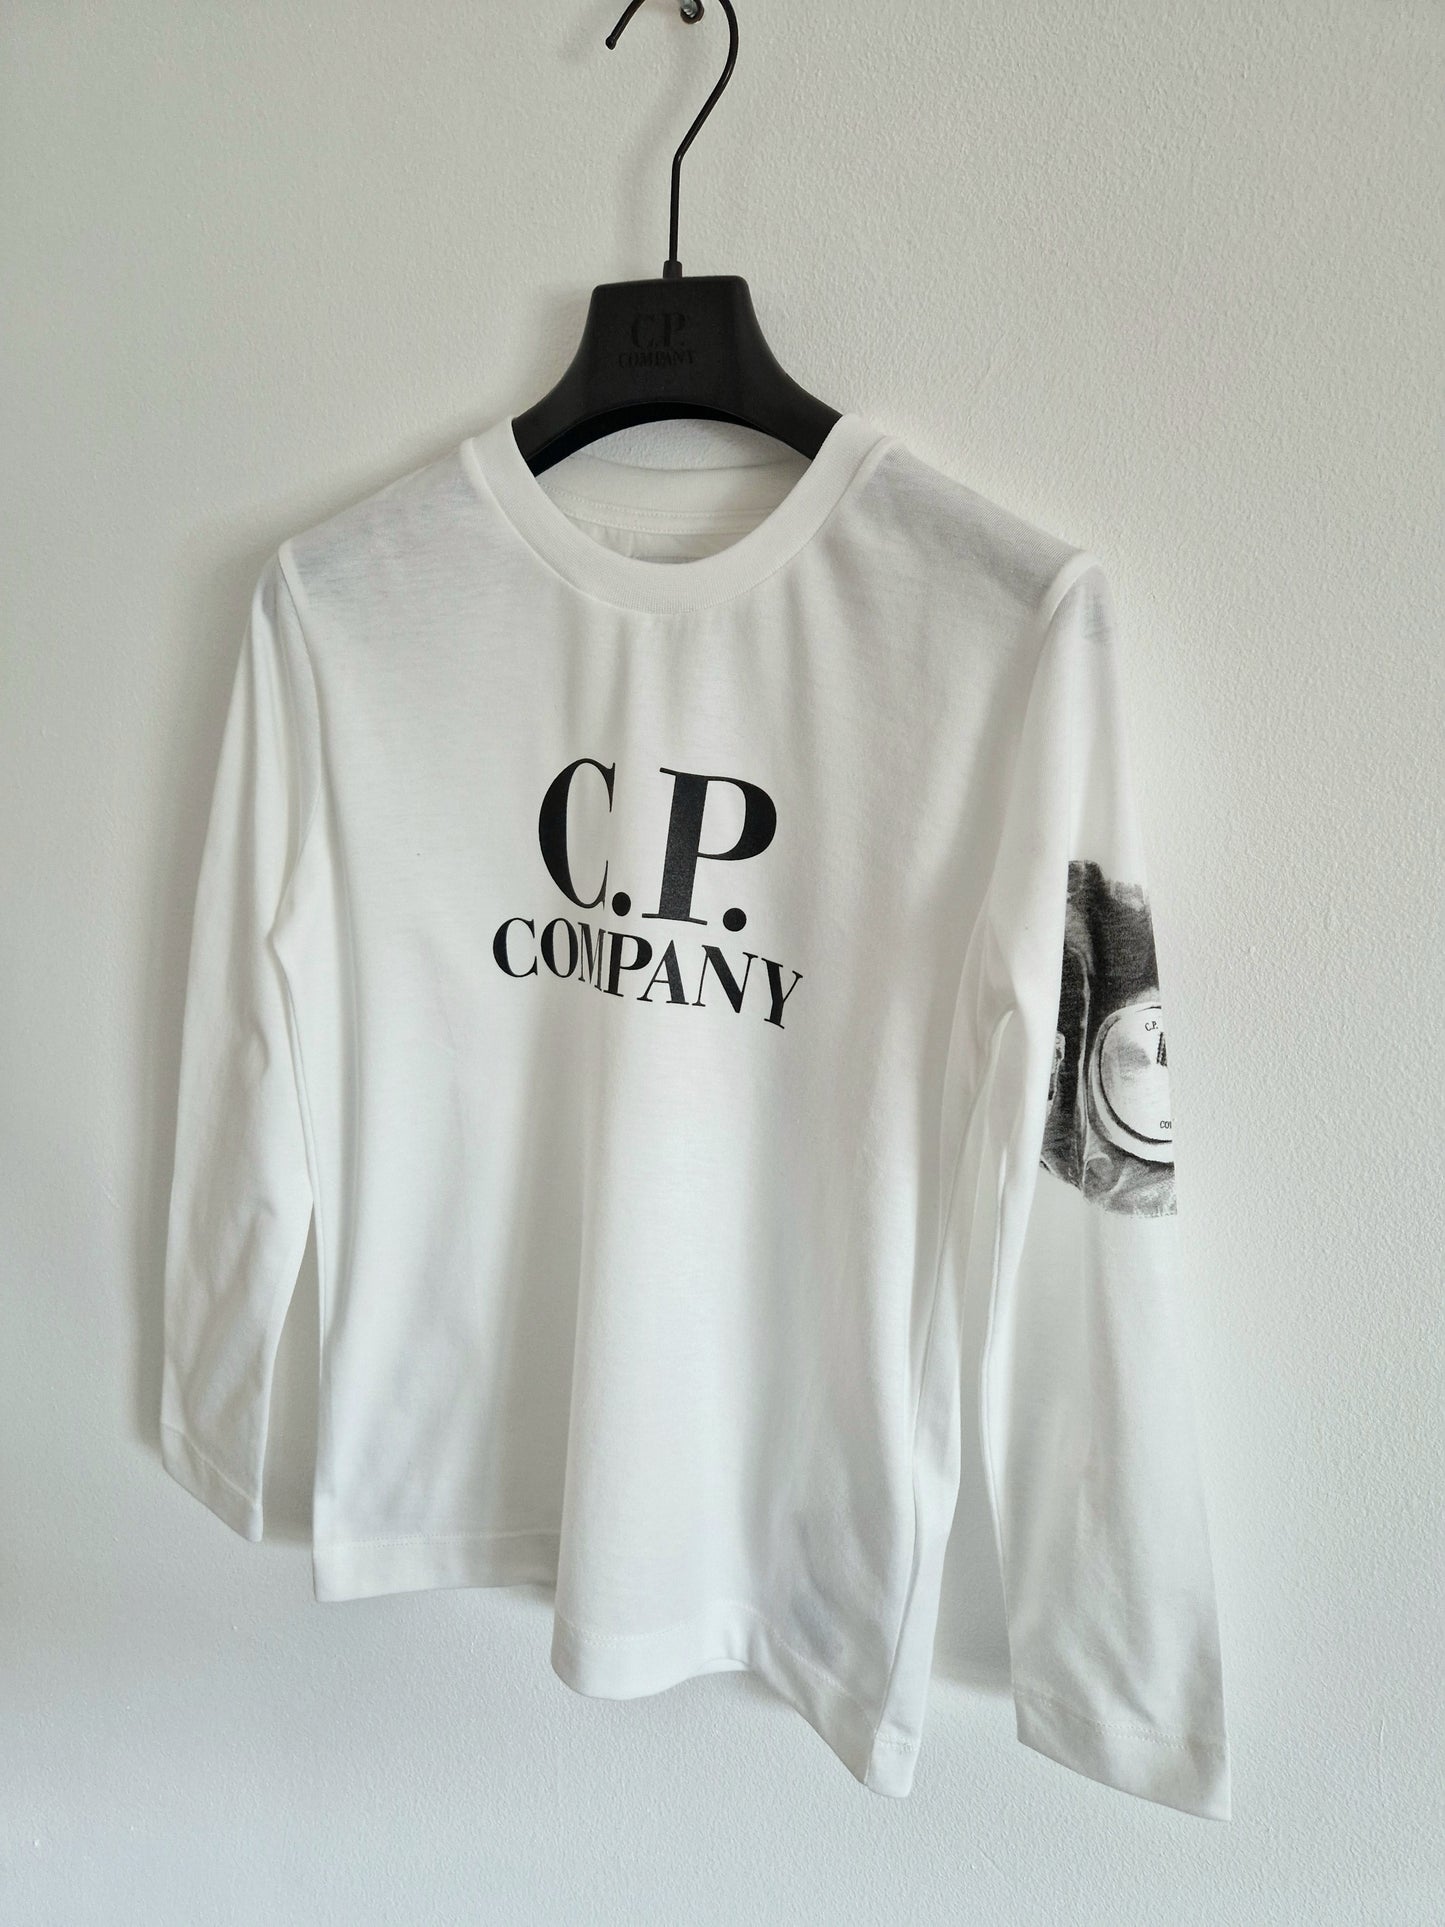 C.P. Company Junior Long Sleeve T-Shirt - White